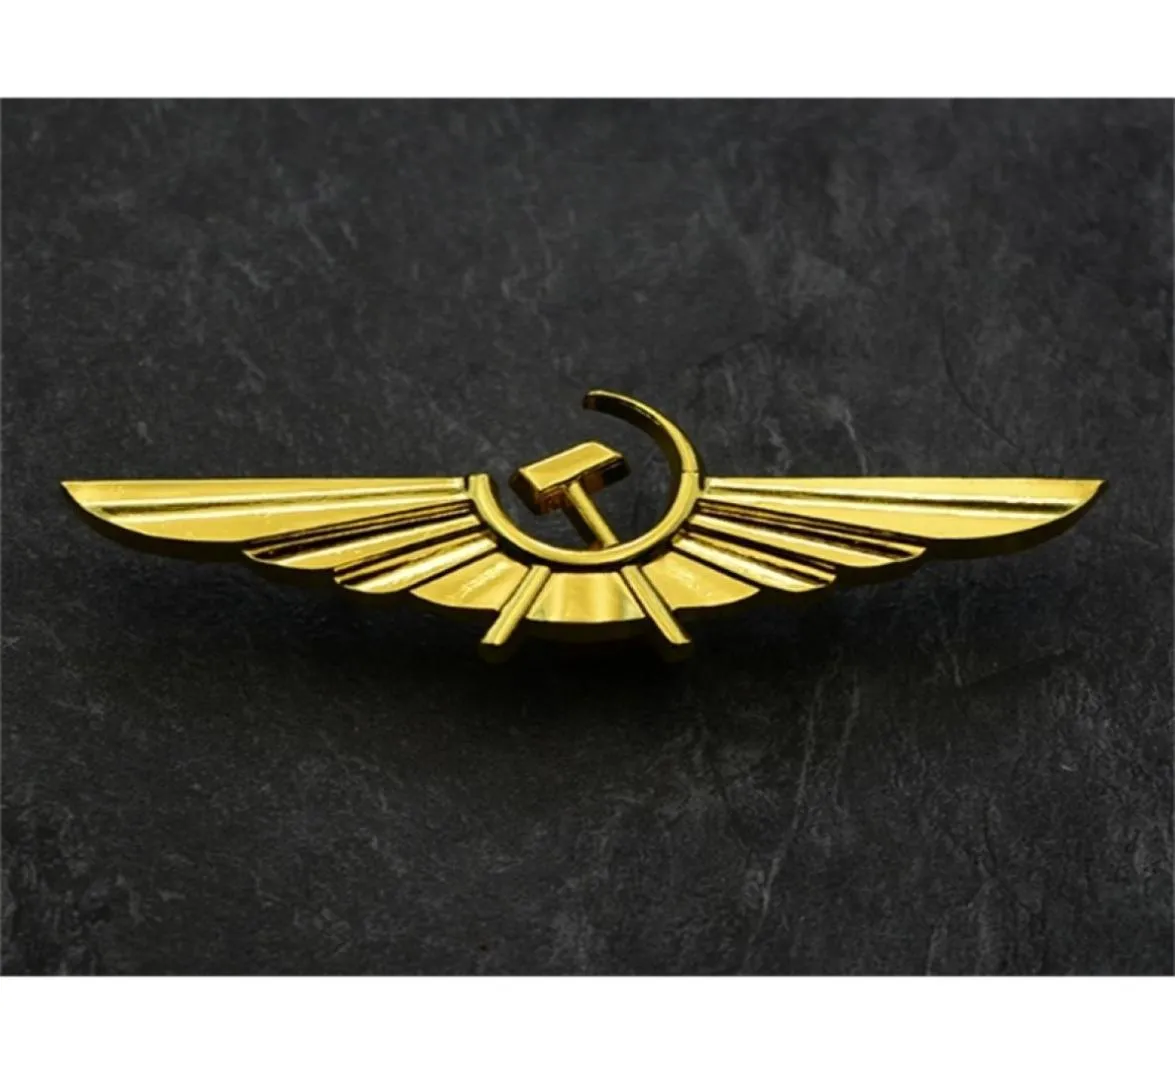 Soviet Union Badge Aeroflot Russian Airlines Brooches USSR Russian Fleet National Aviation Civil Metal Collar Pin 2010098205919